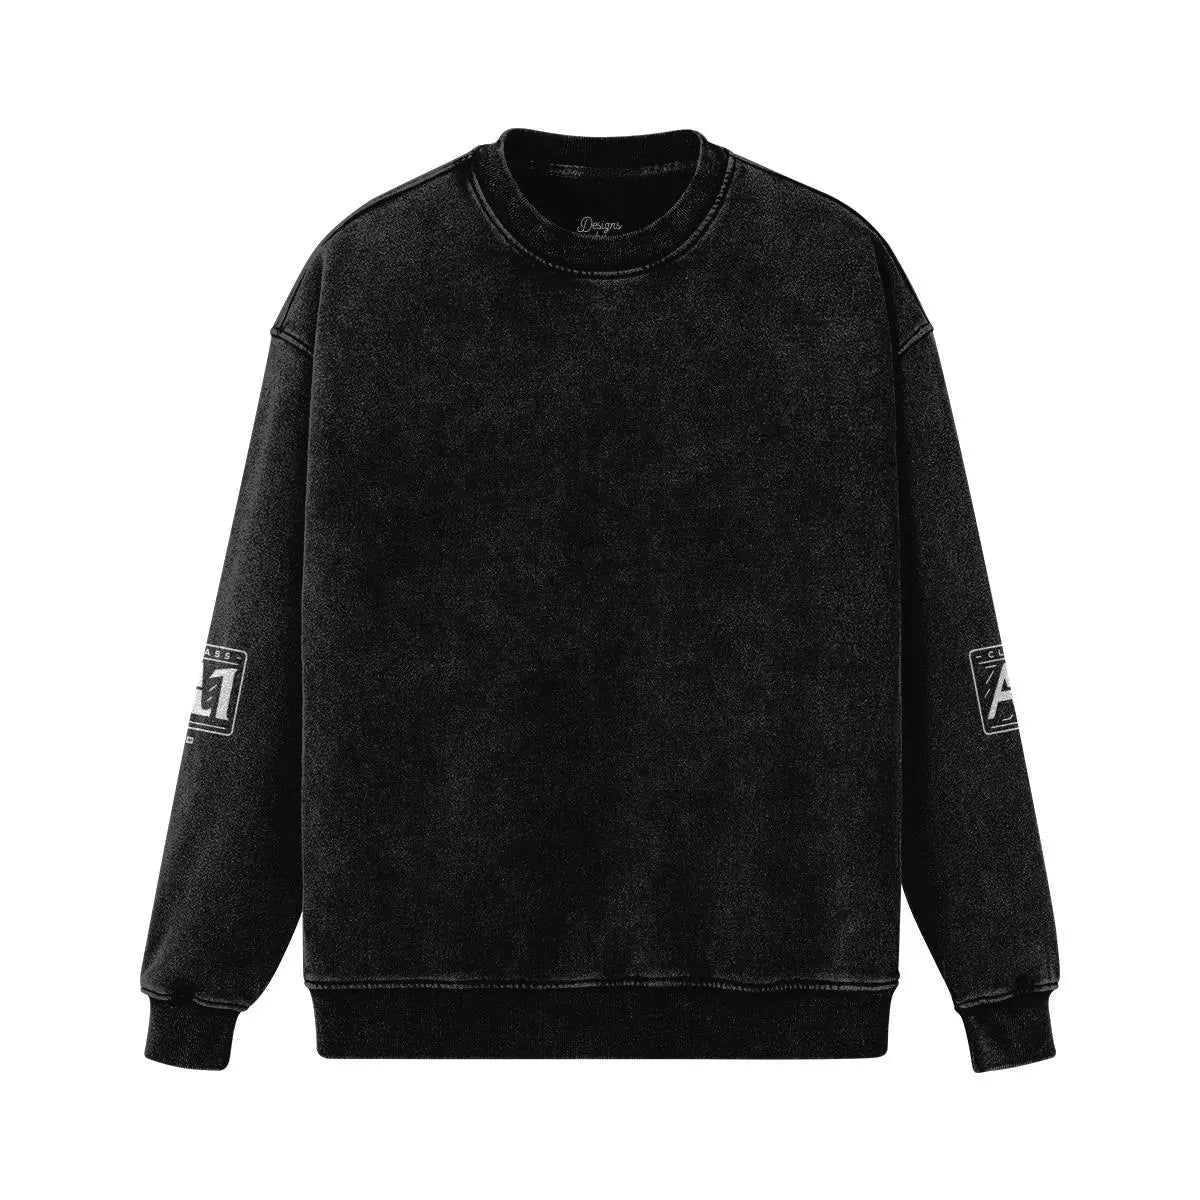 Faded Black ClassA1 On My Back Print Oversized Worn Effect Sweatshirt - Sweatshirt at TFC&H Co.